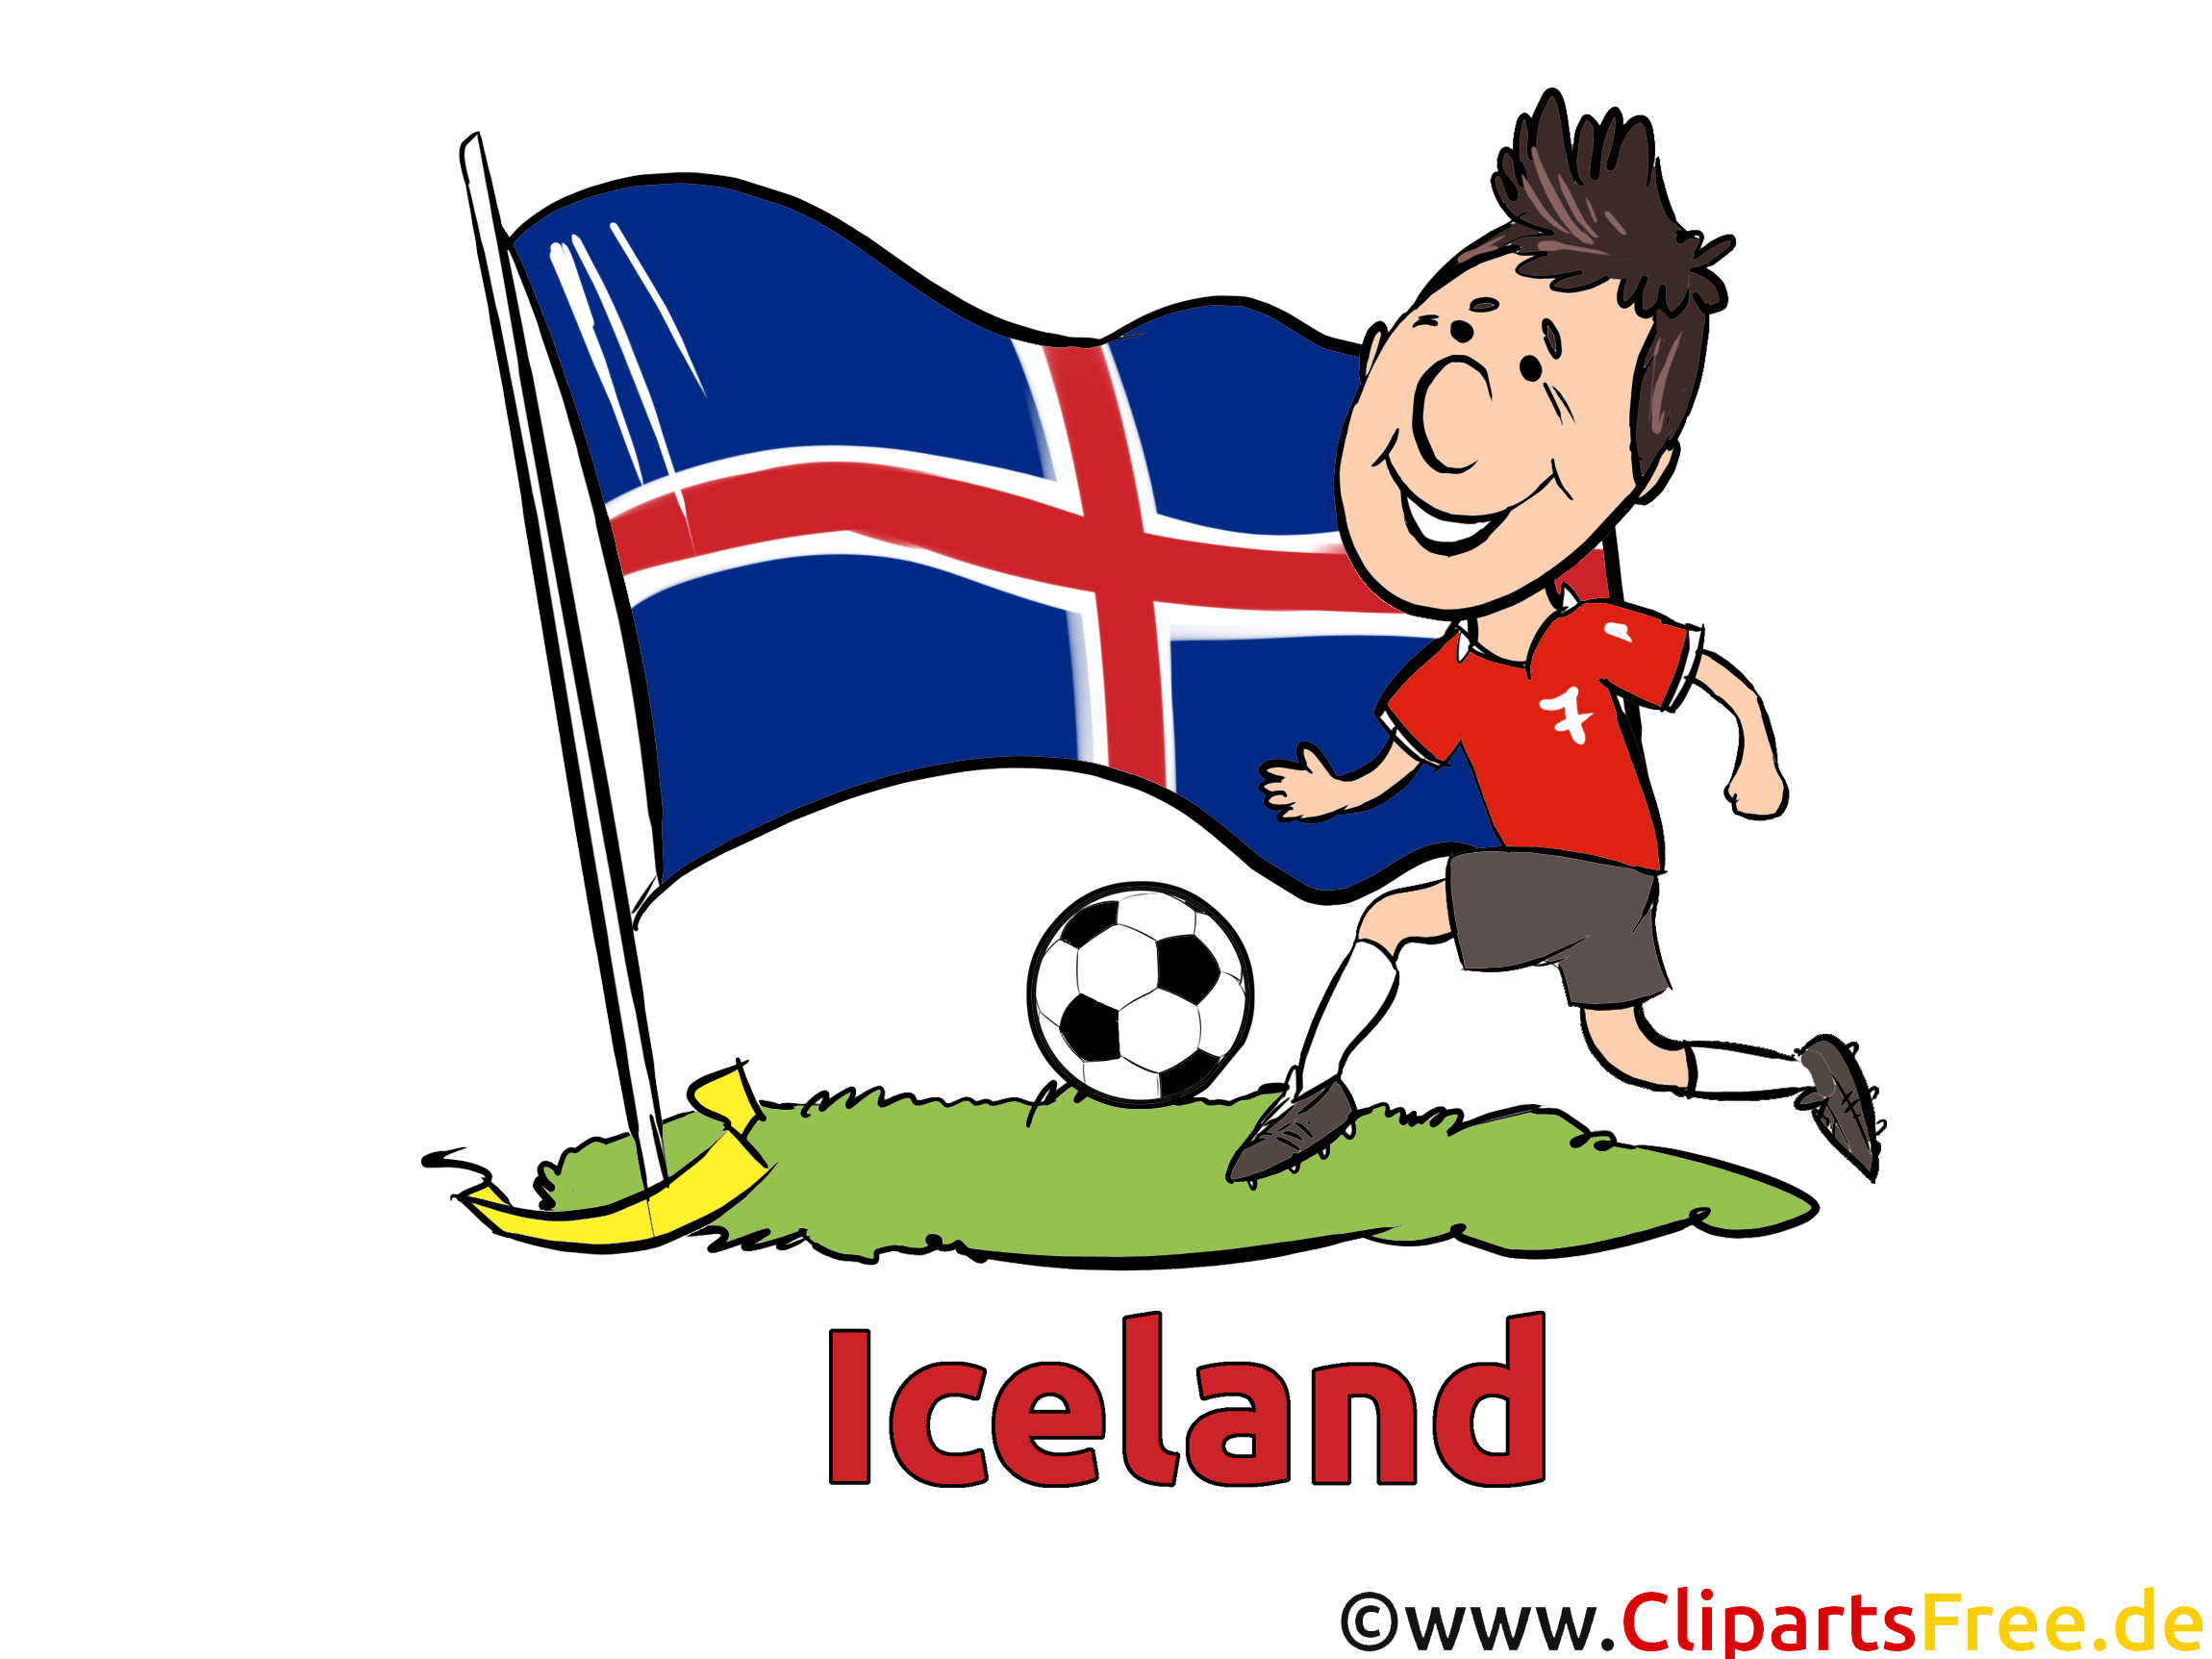 Joueur Football Islande Soccer gratuit Image